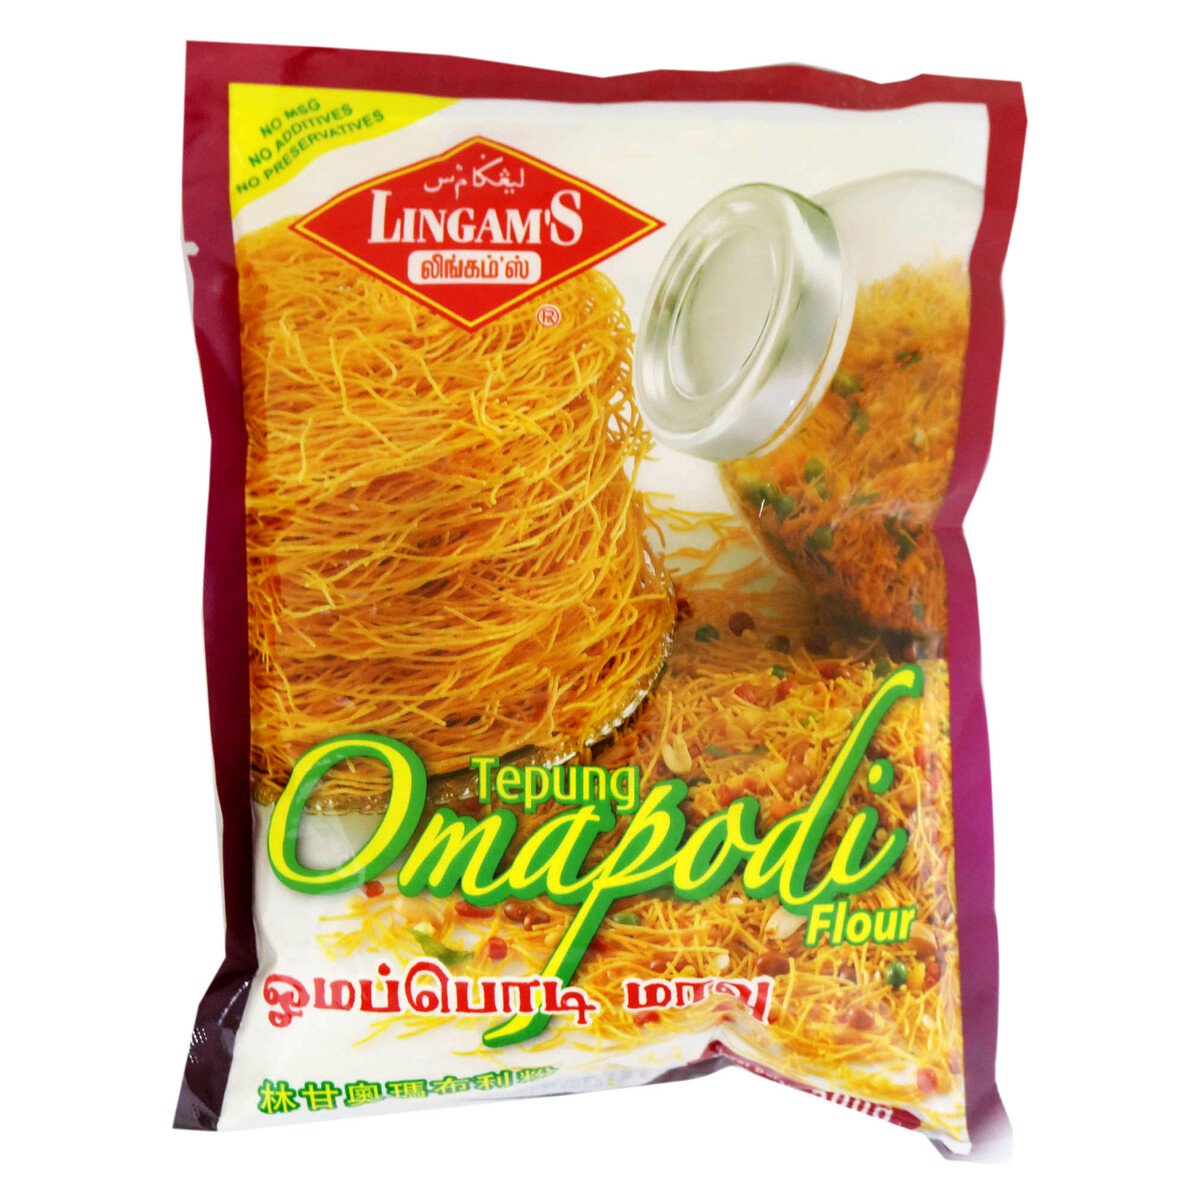 Lingam's Omapodi 500g